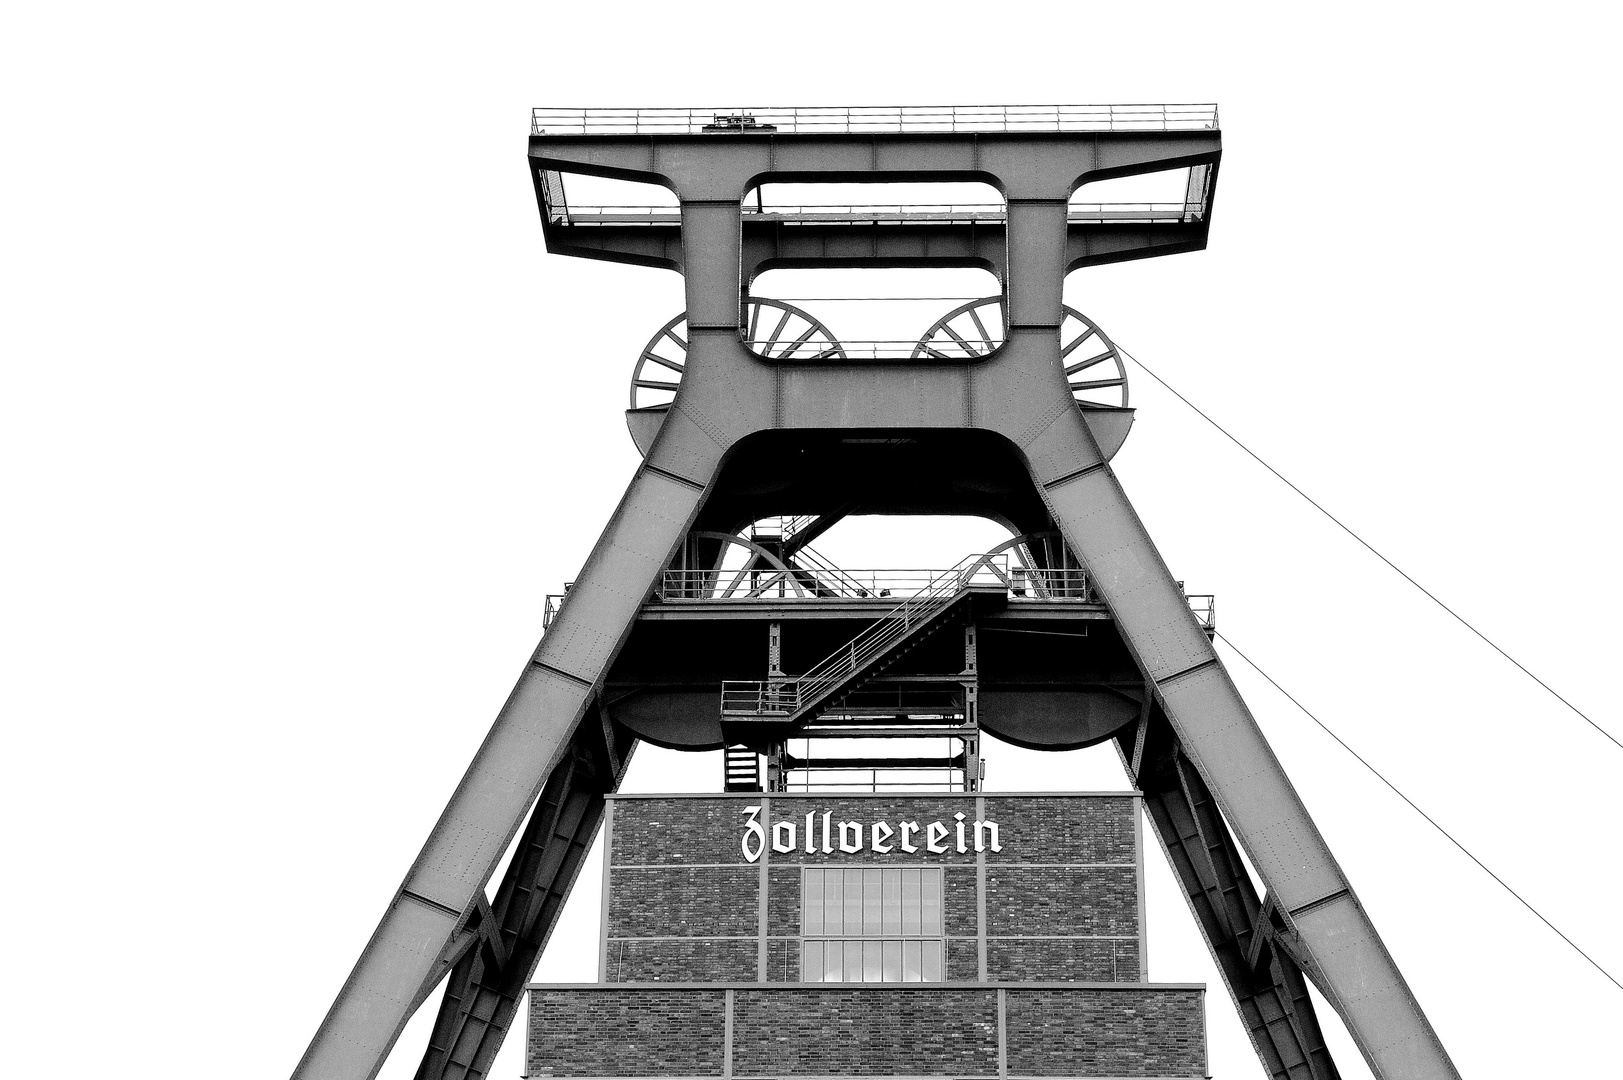 Coal Mine "Zollverein" - Unesco World Heritage